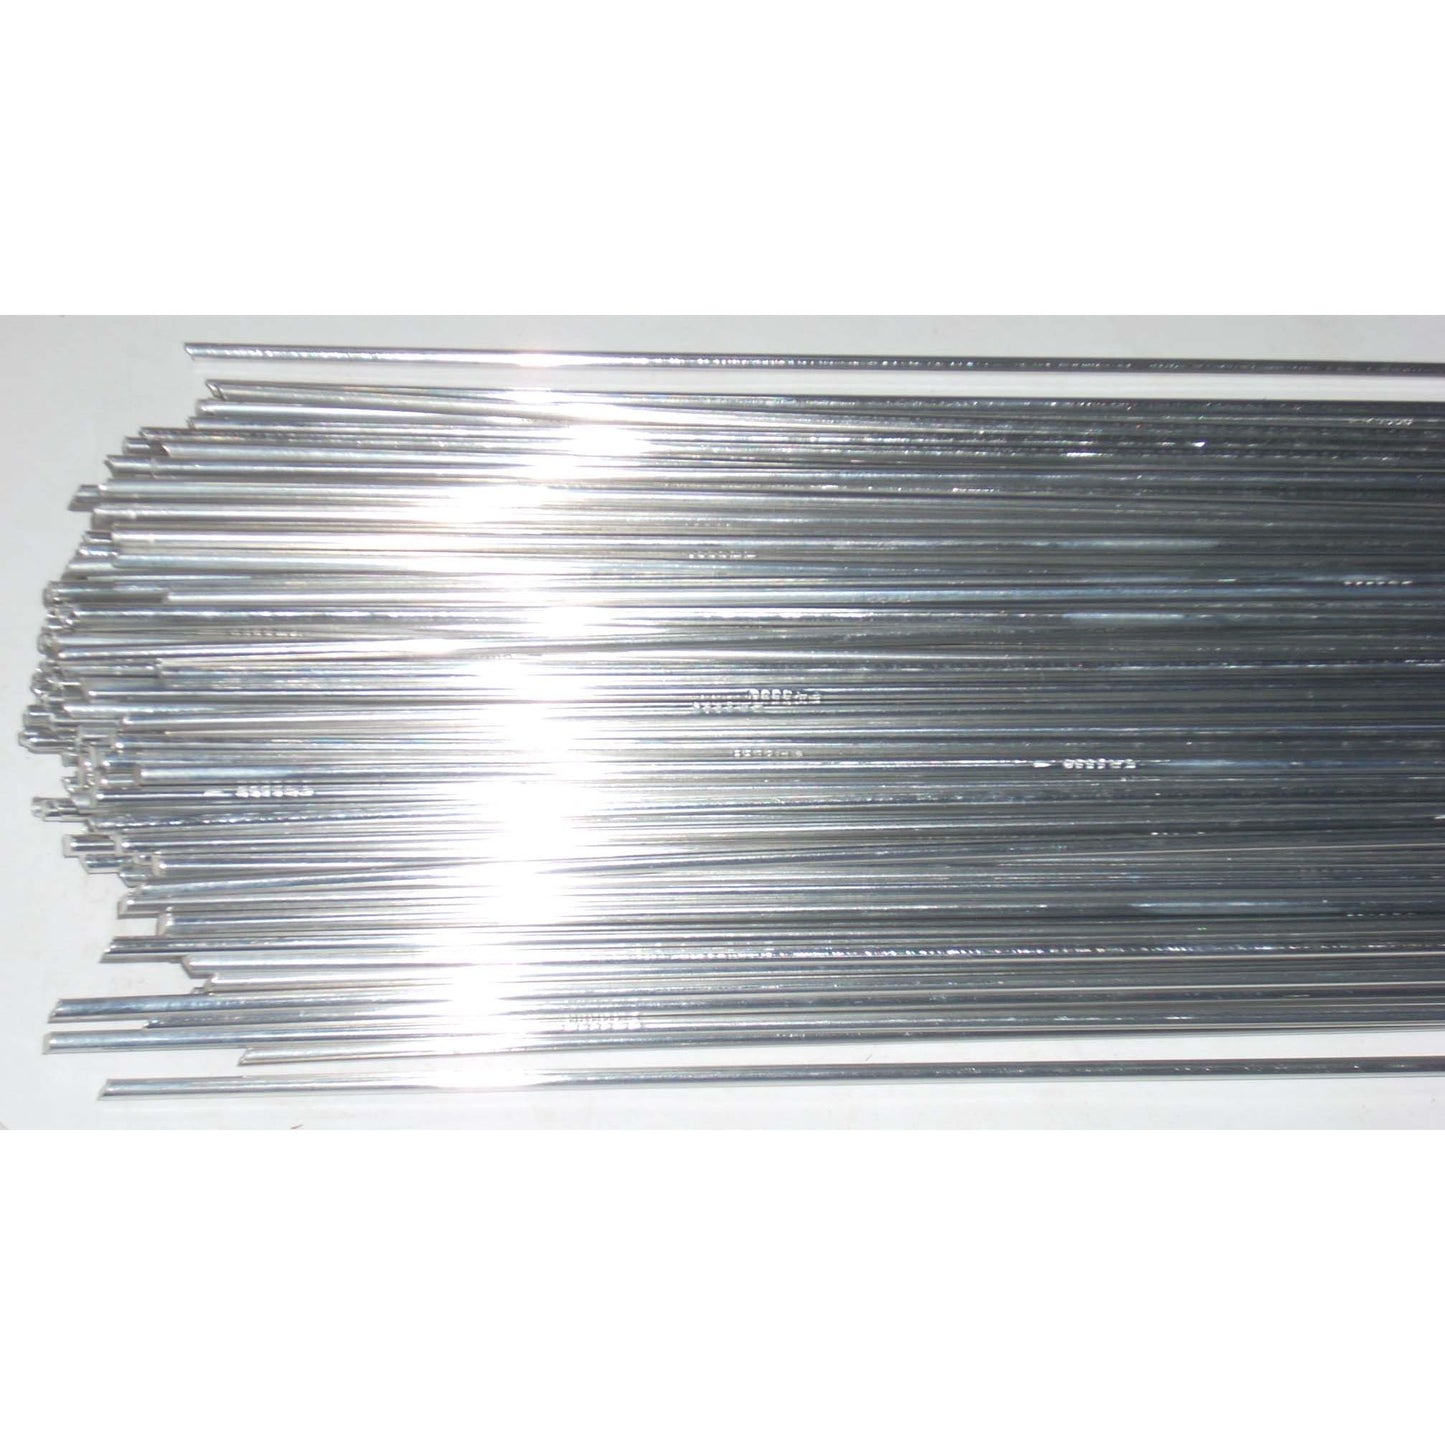 Unibraze 5356 Aluminum Tig Welding Rods 1/8 x 36" 7.45 lbs